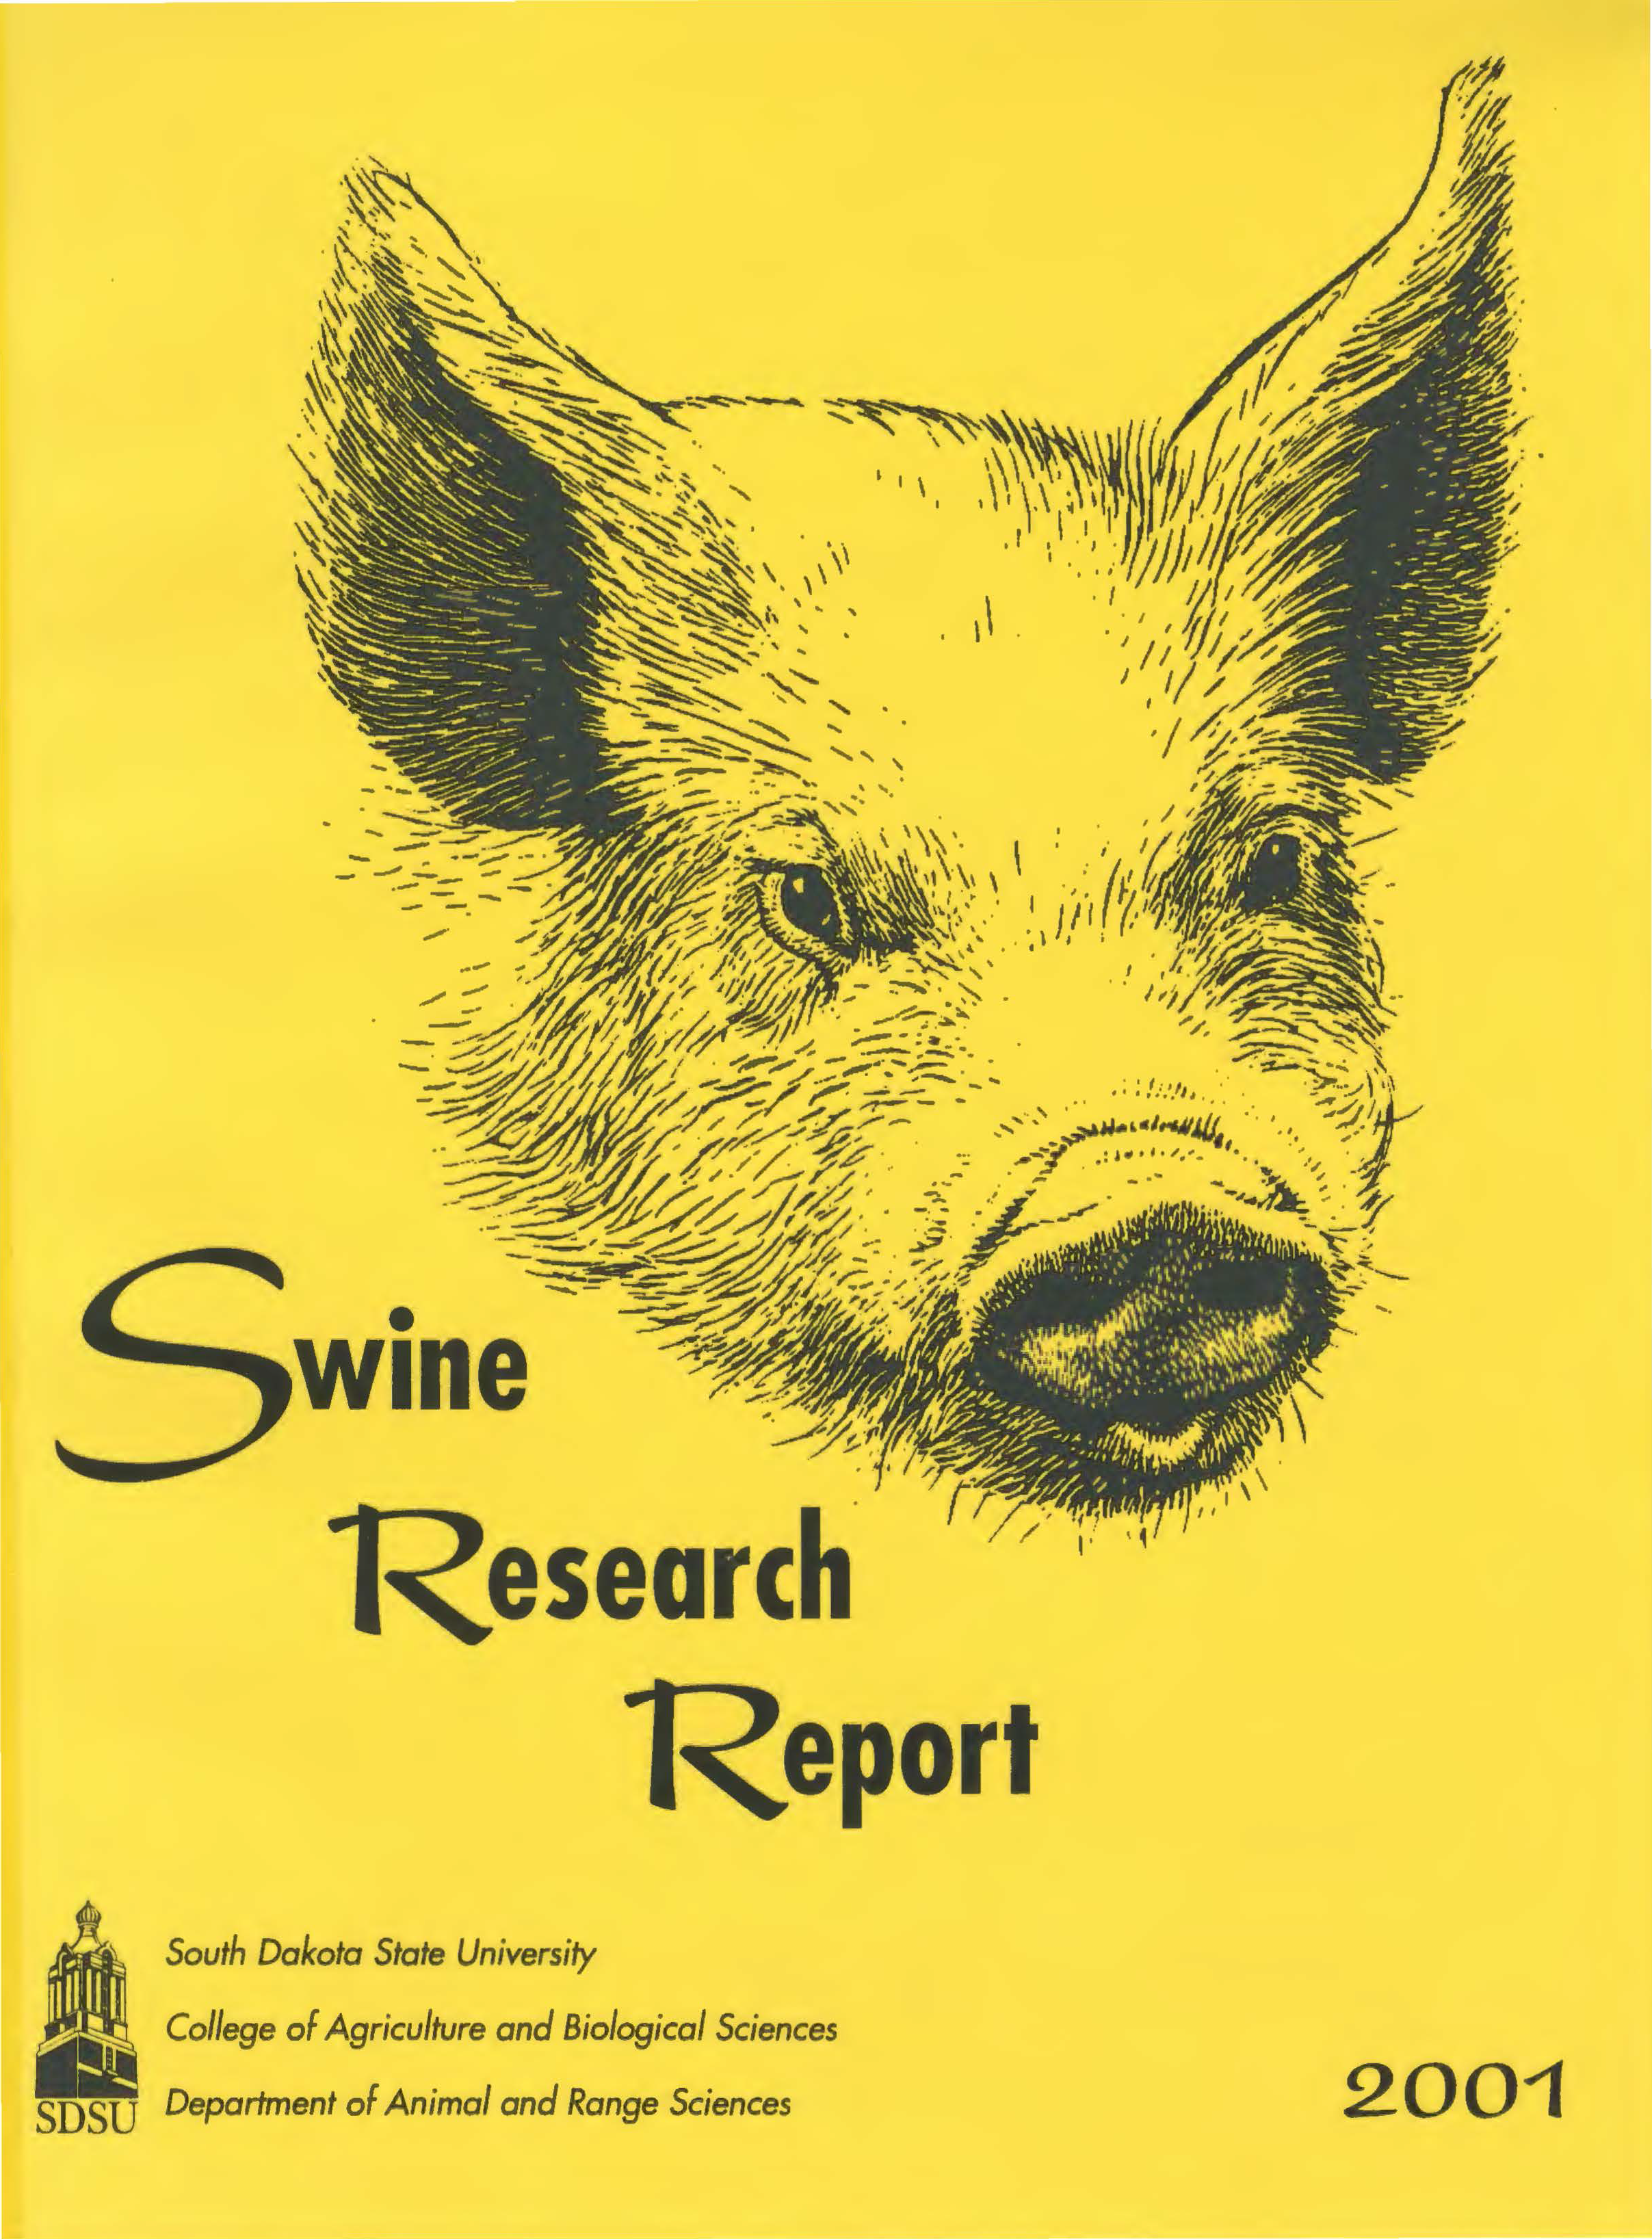 South Dakota Swine Research Report, 2001